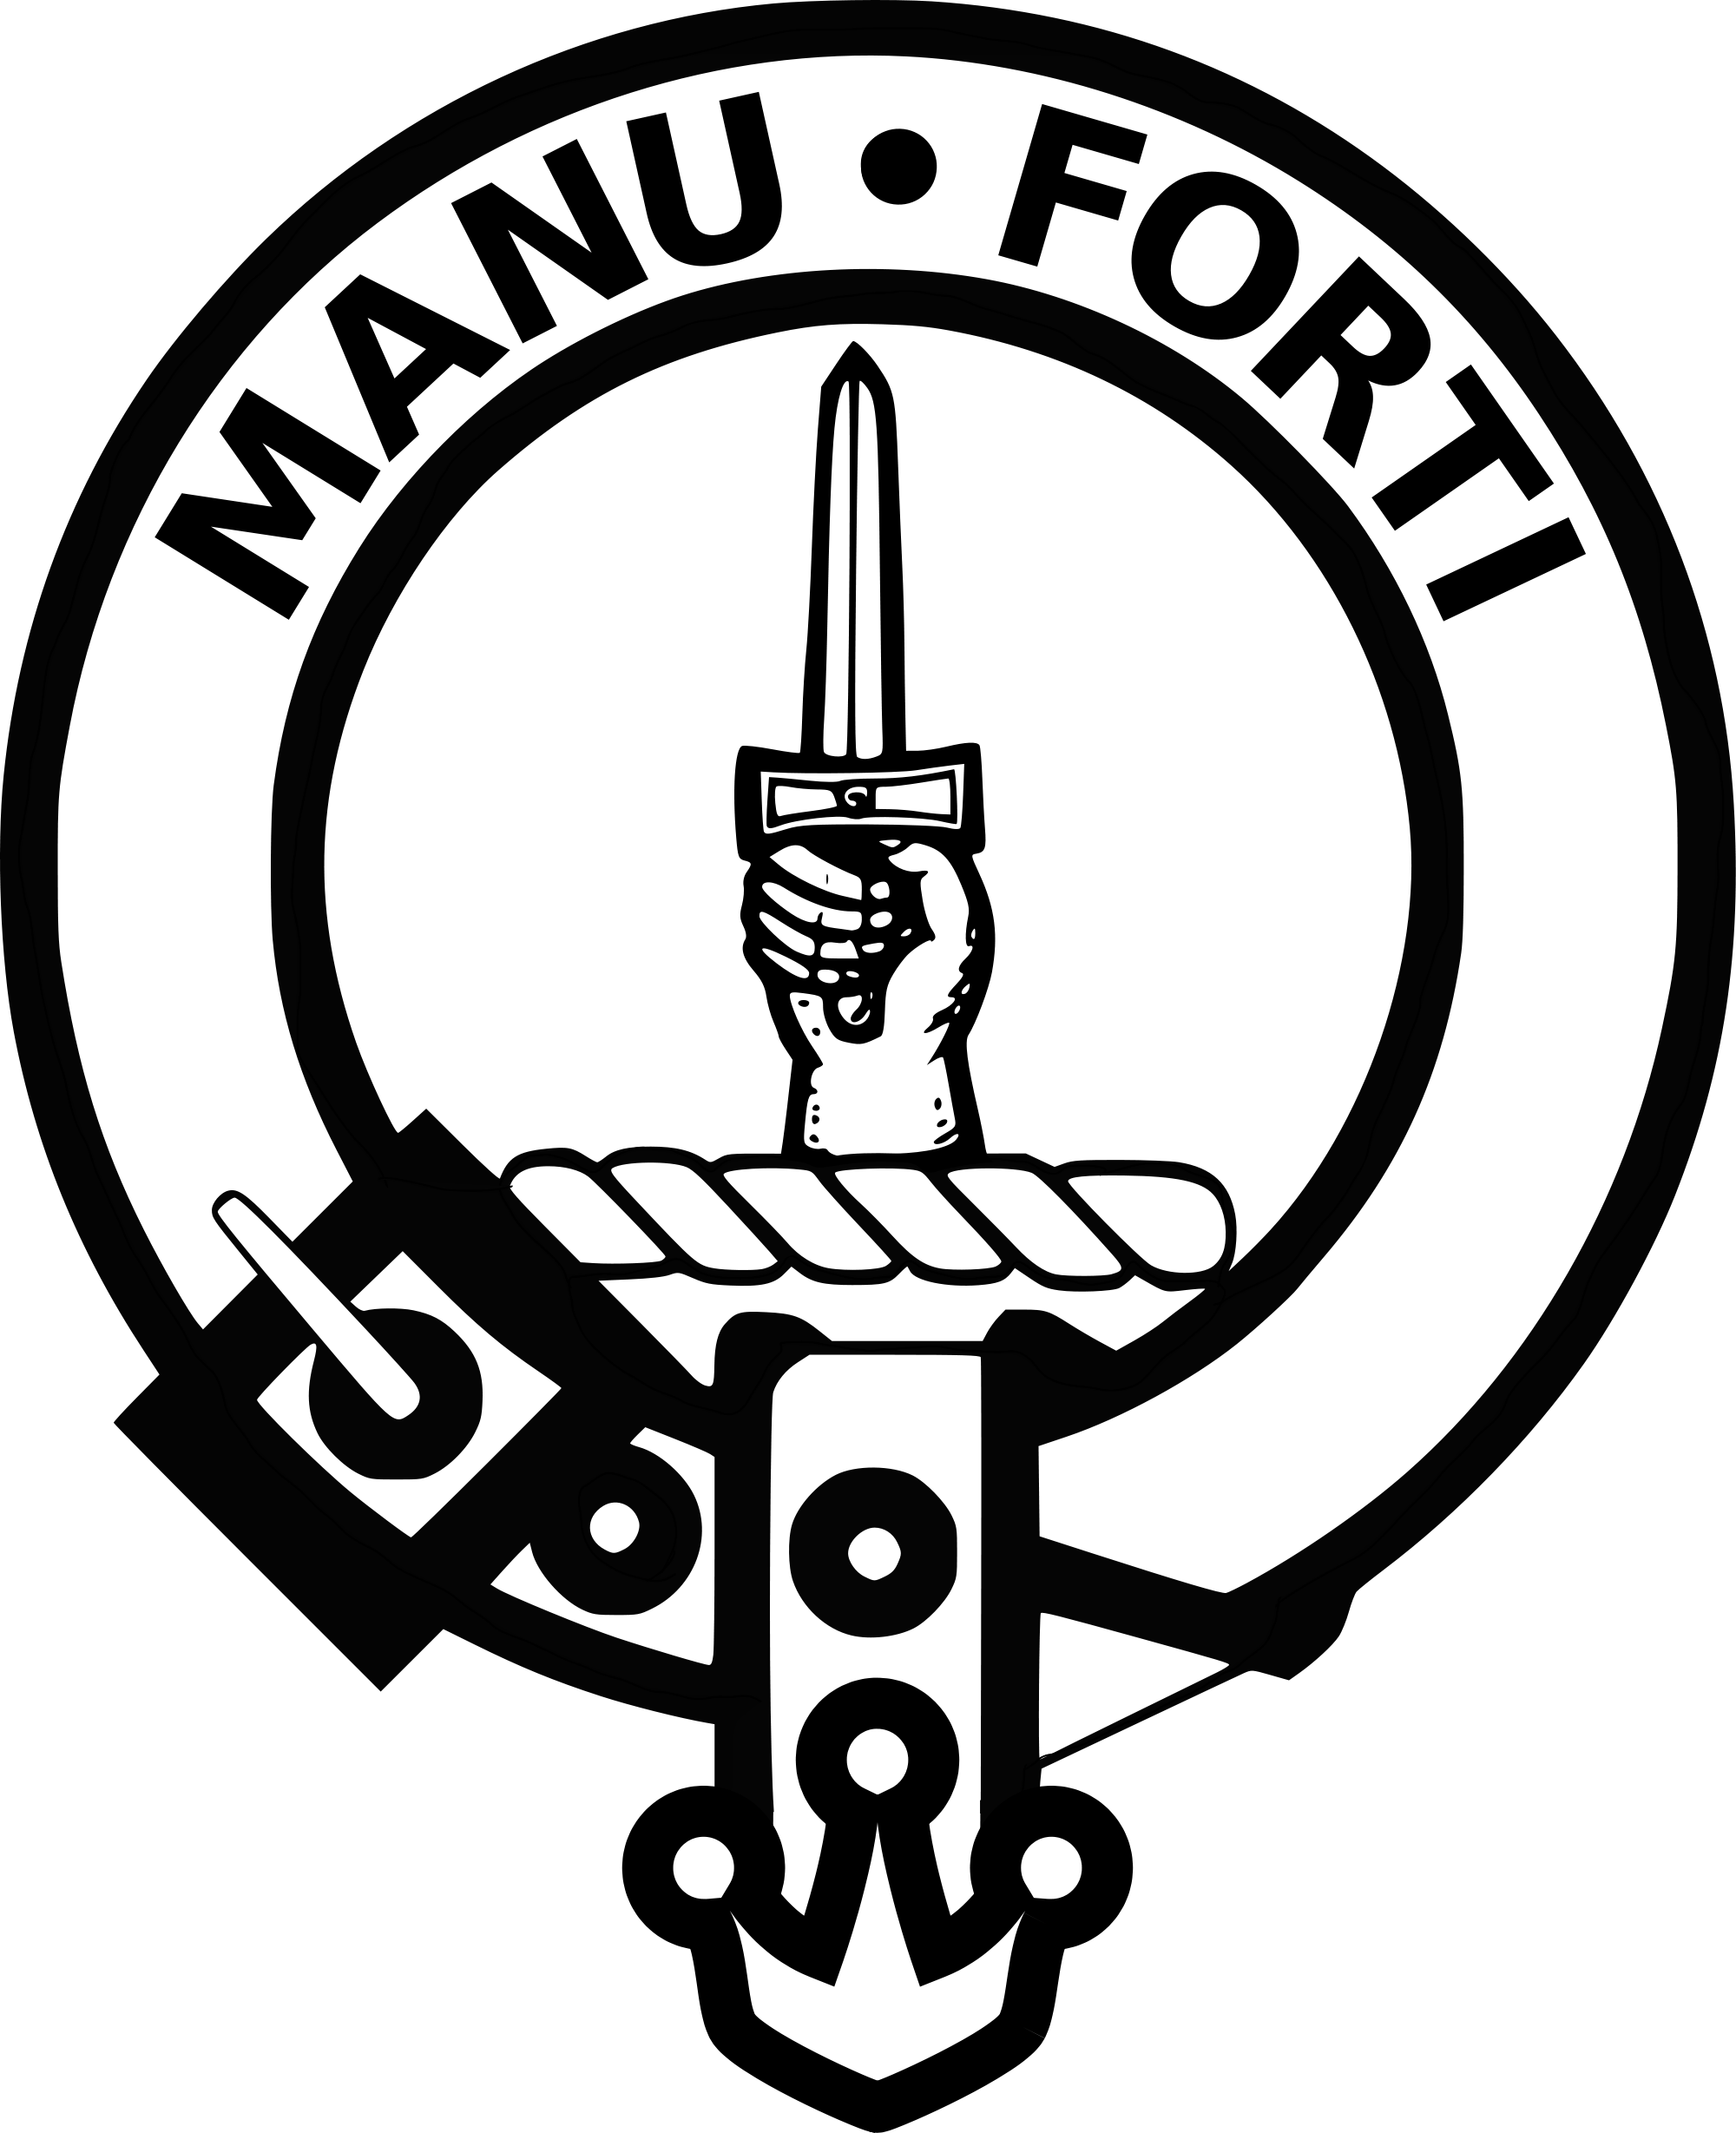 Mackay Clan Crest (2000x2457)